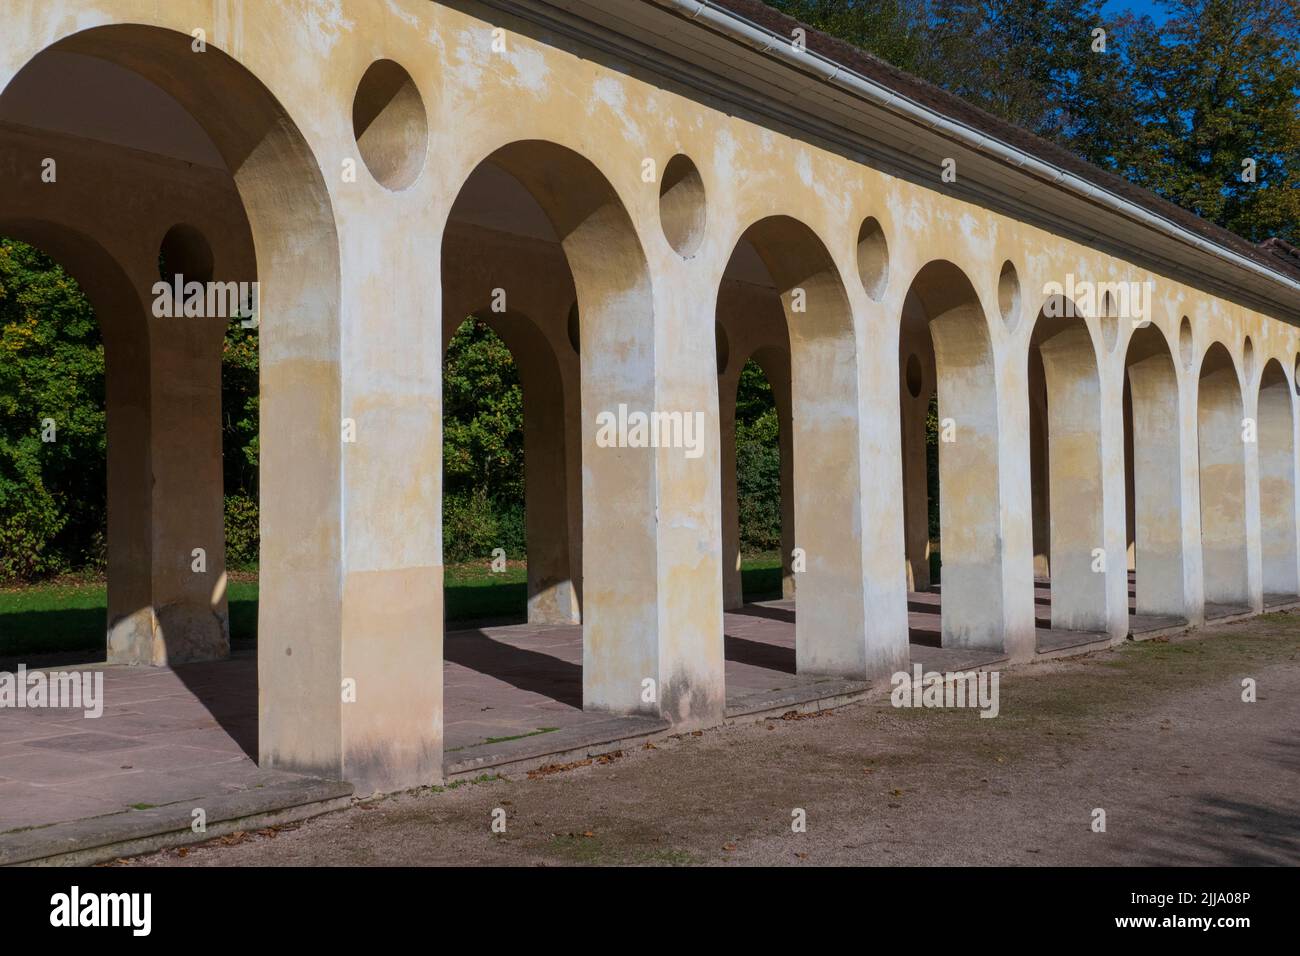 Kollonaden, Torbogen, Gang am historischen, öffentlichen Schloß favorito a Foerch Foto Stock